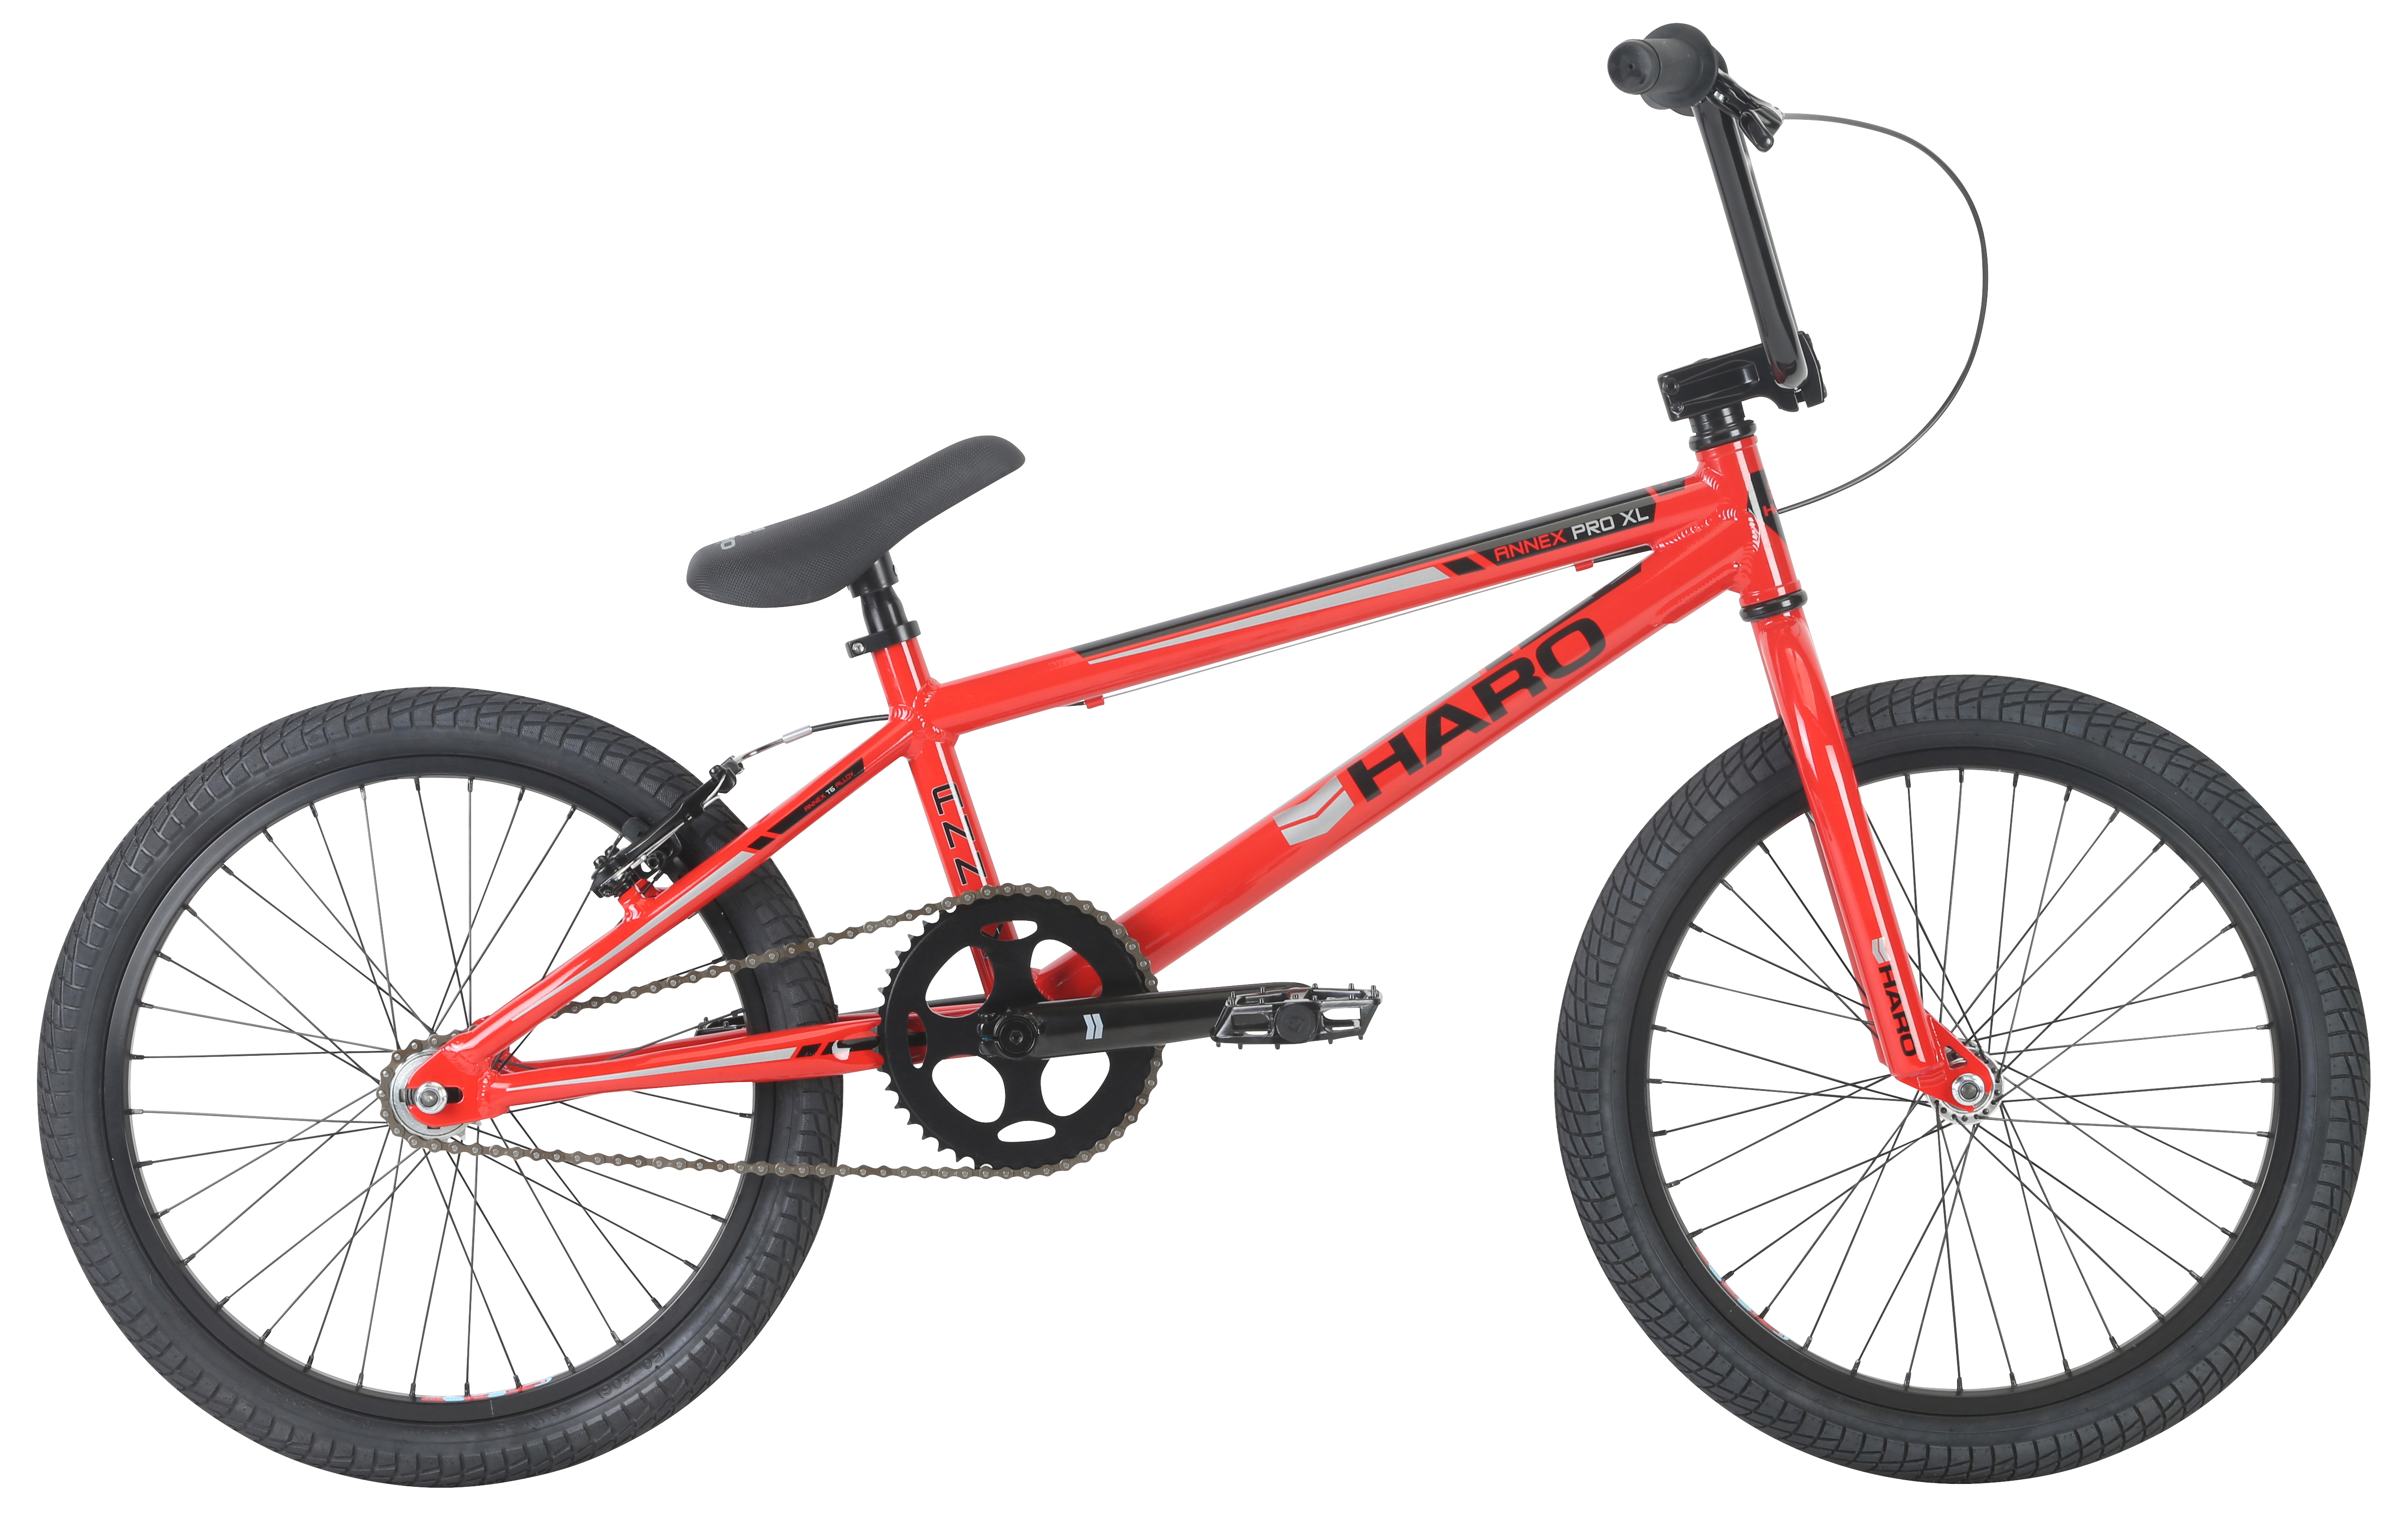  Отзывы о Велосипеде BMX Haro Annex Pro XL 2019